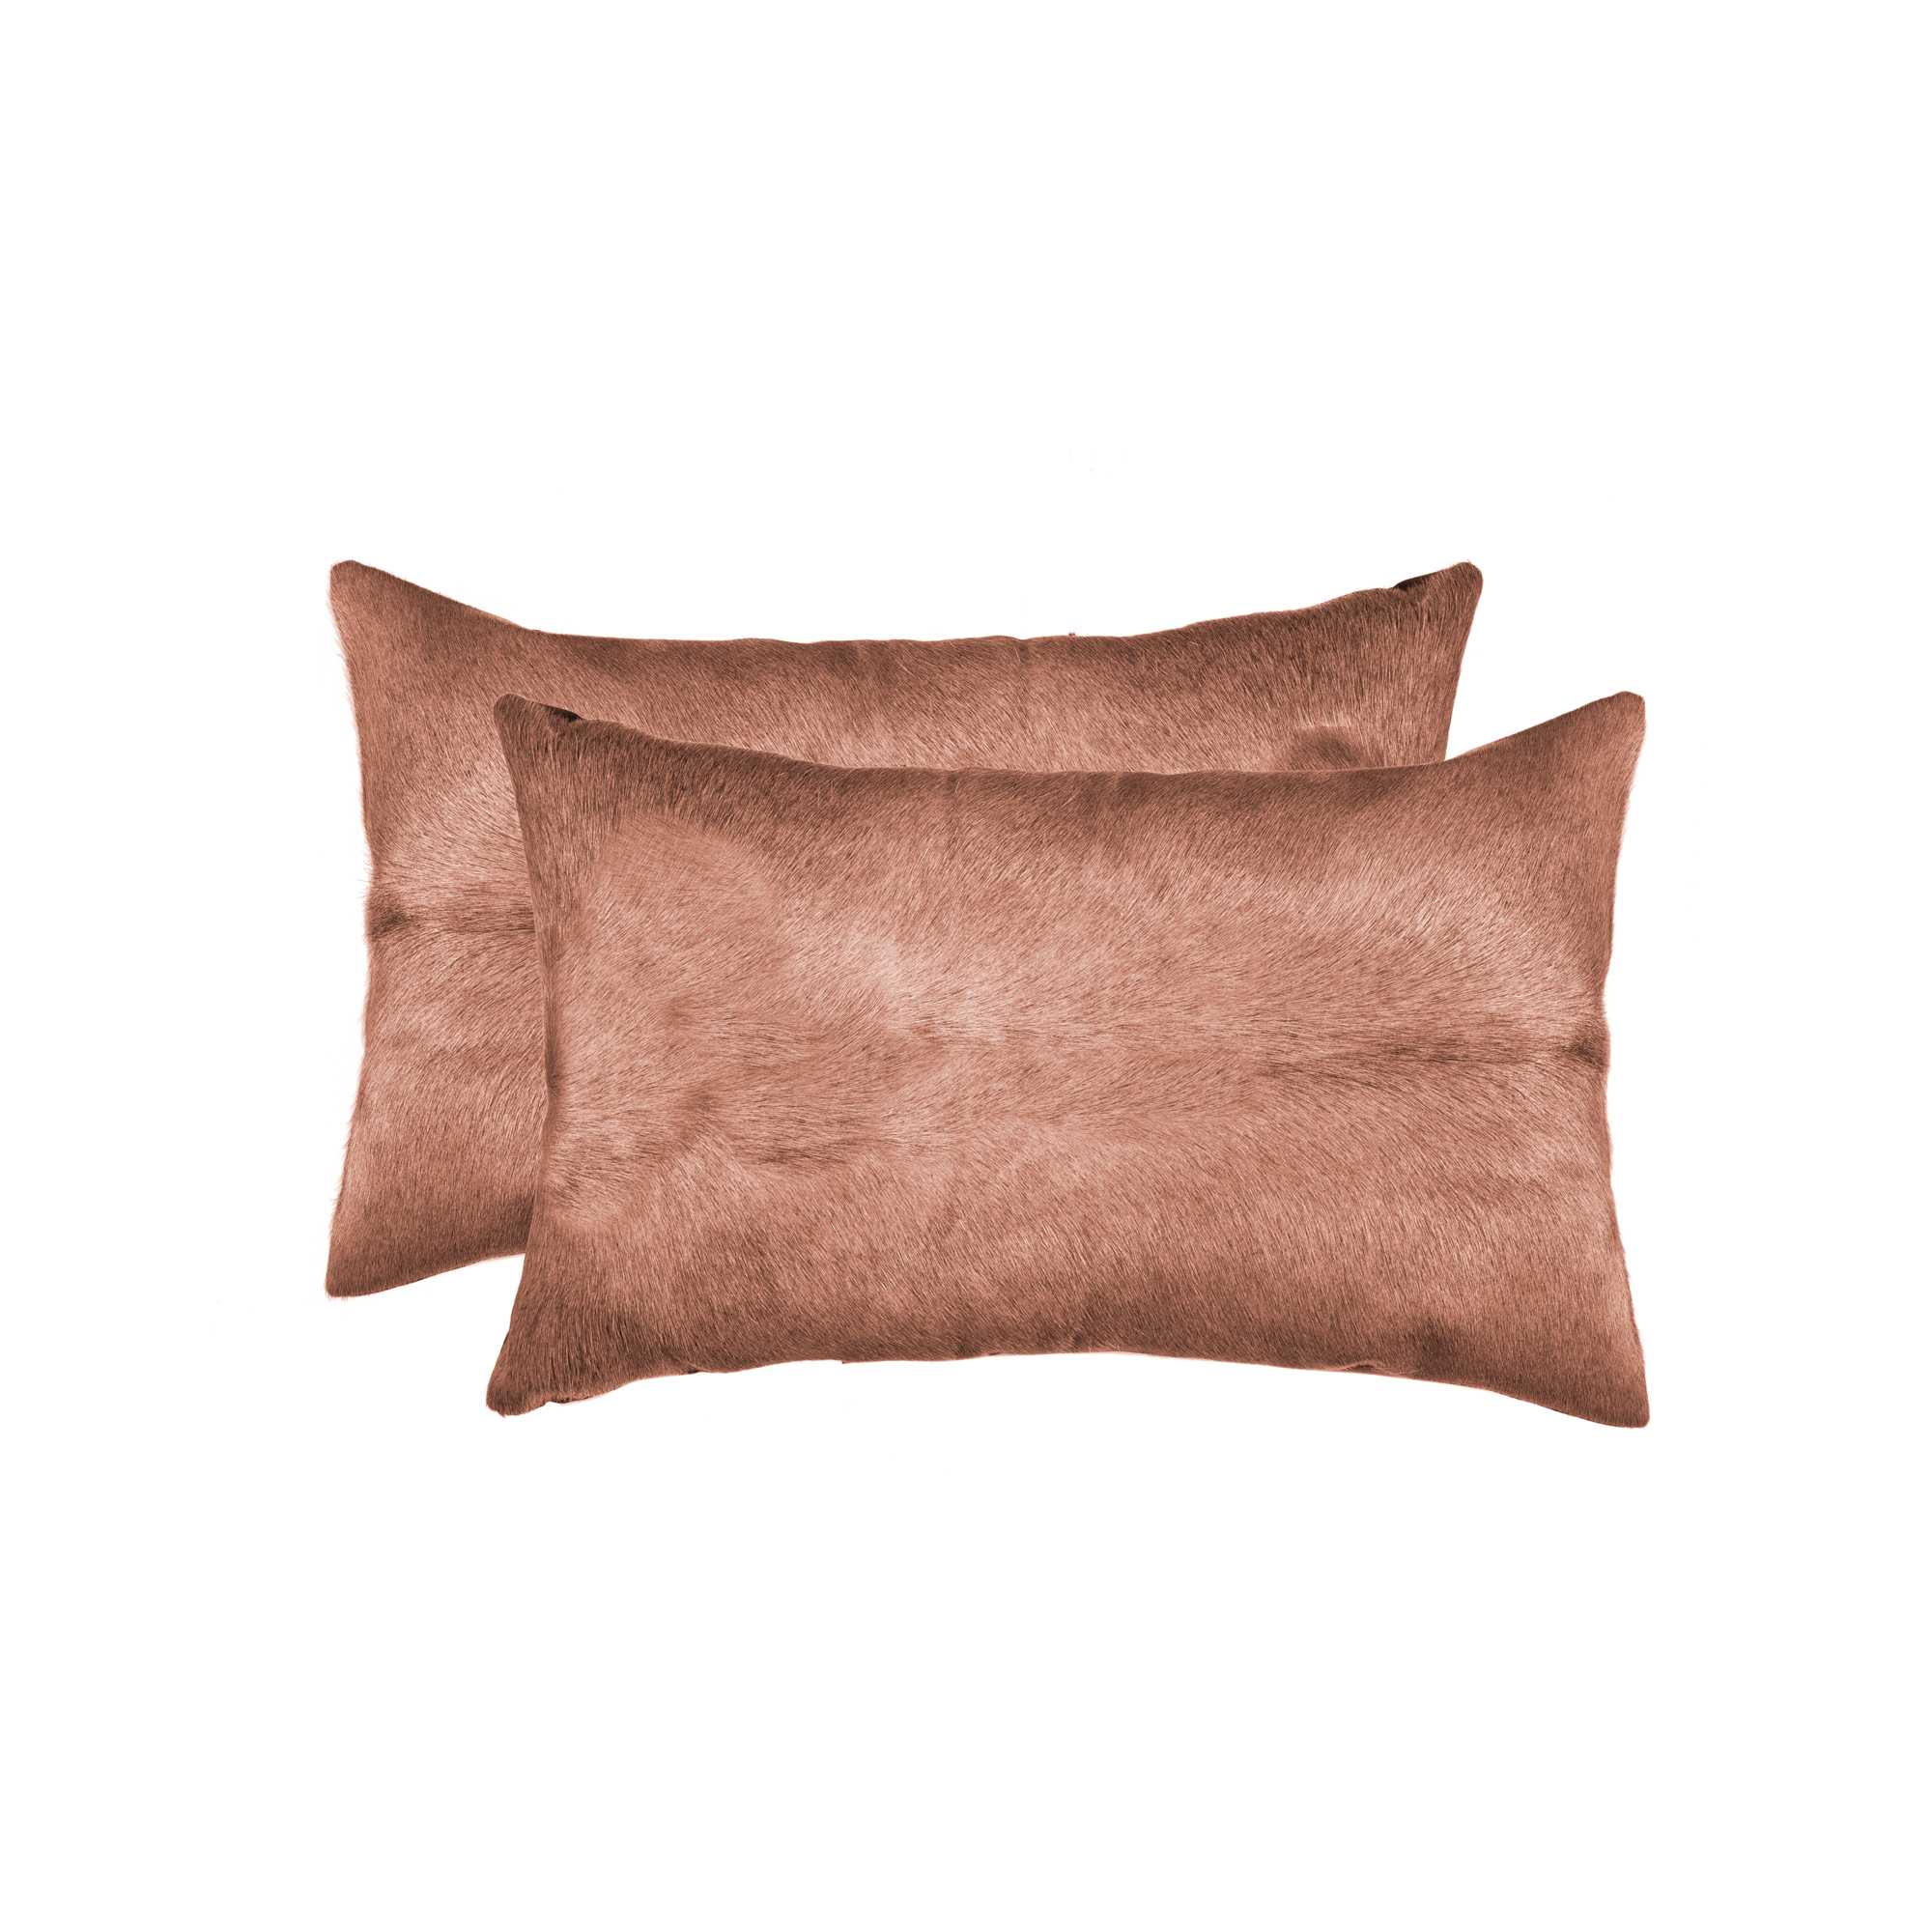 12" x 20" x 5" Brown, Cowhide - Pillow 2-Pack